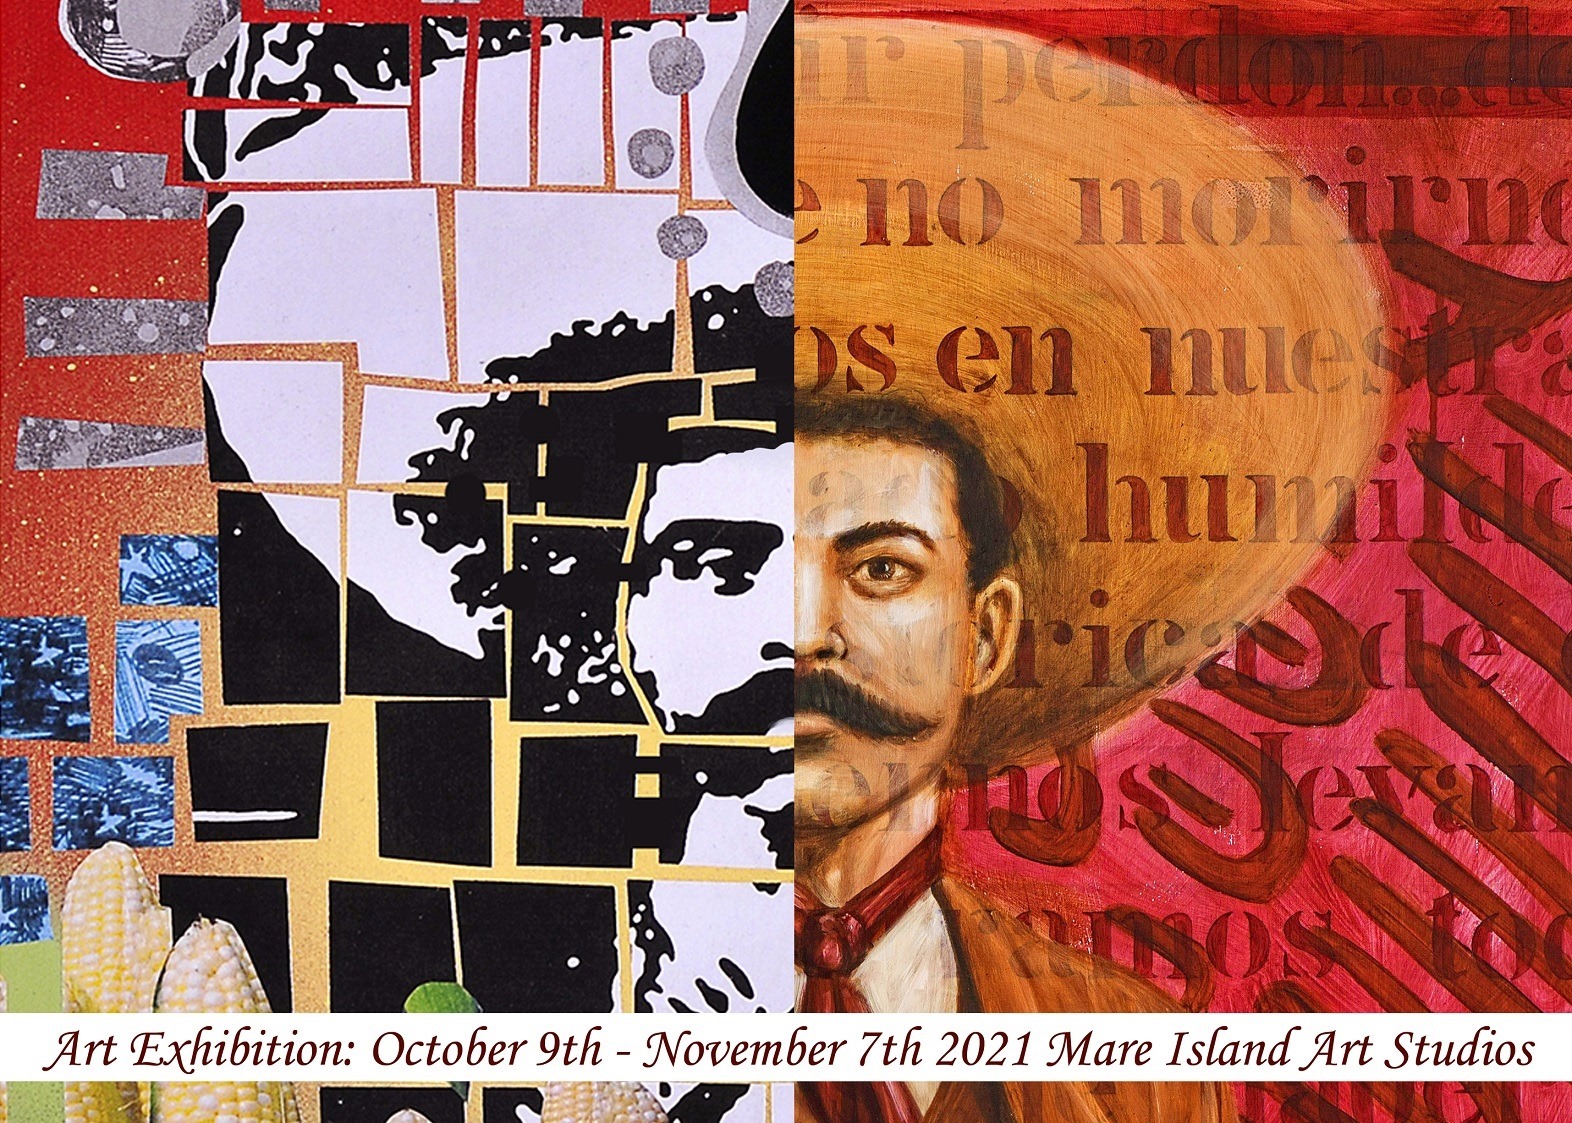 Art Exhibition: Mark & Jose - Opening Reception